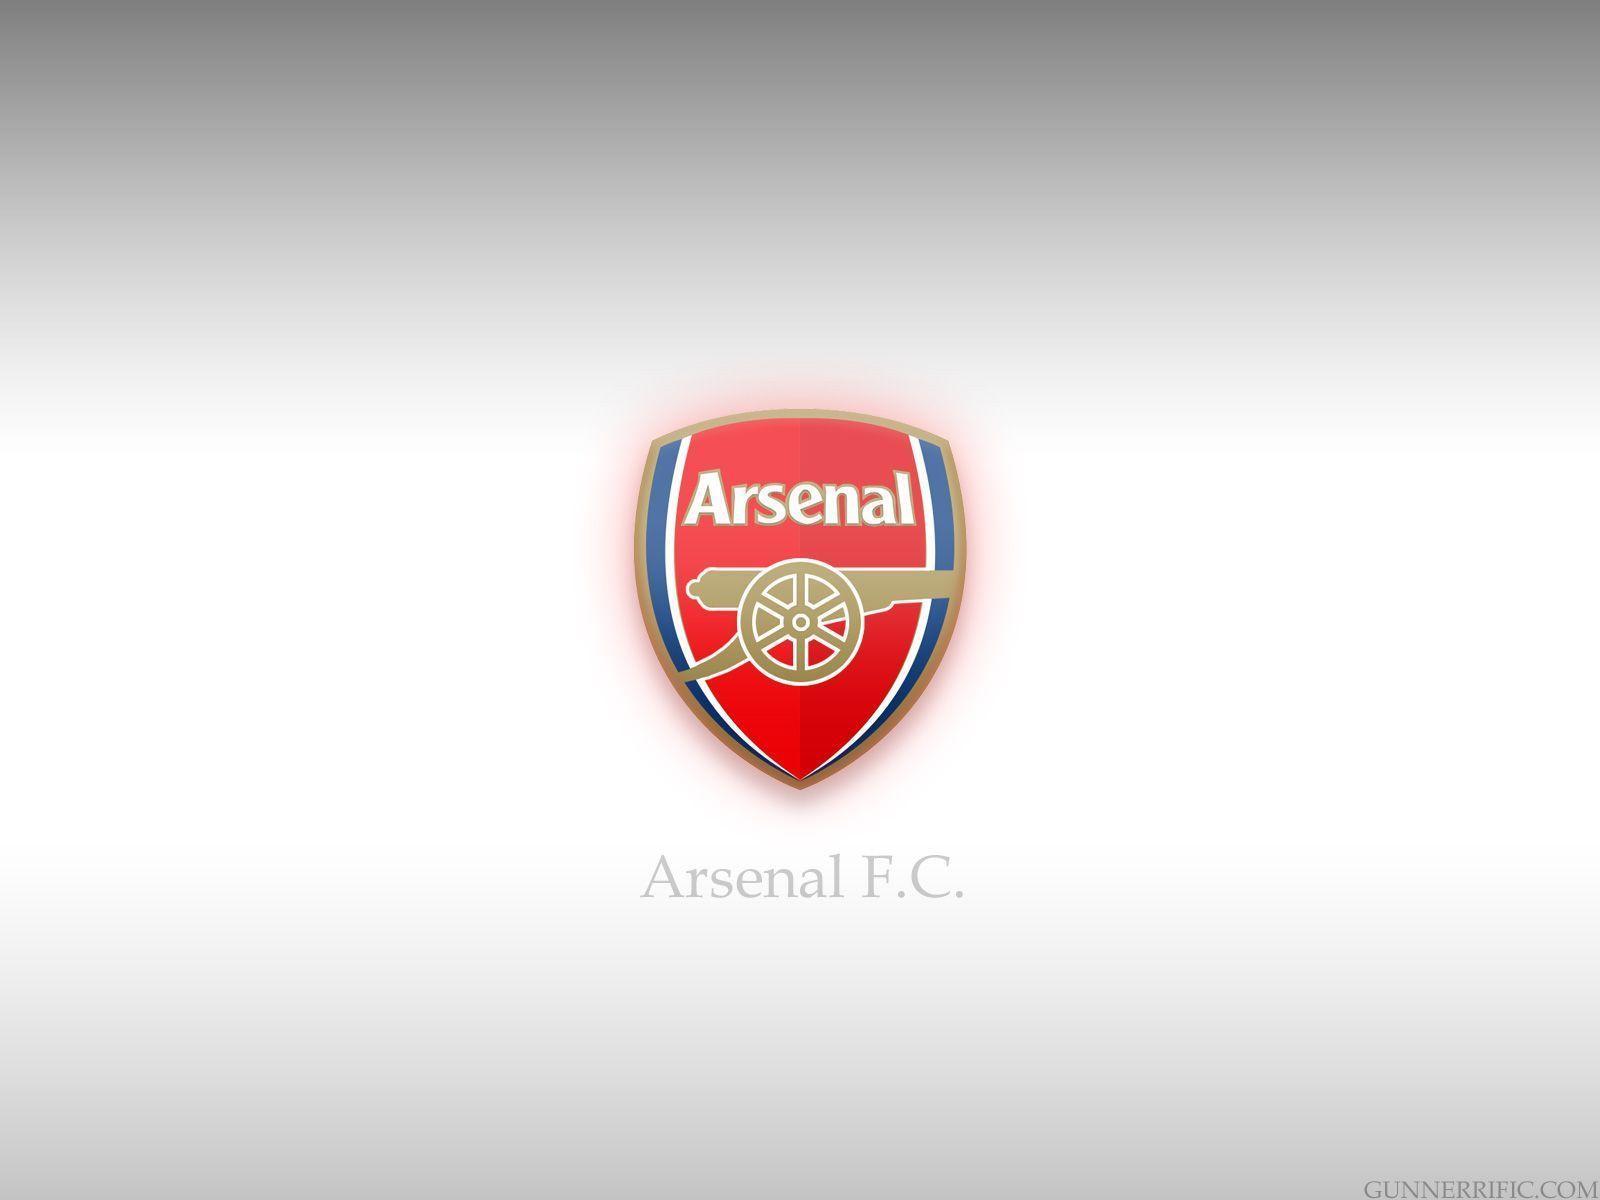 Arsenal F.c. Wallpaper HD 23745 Image. wallgraf